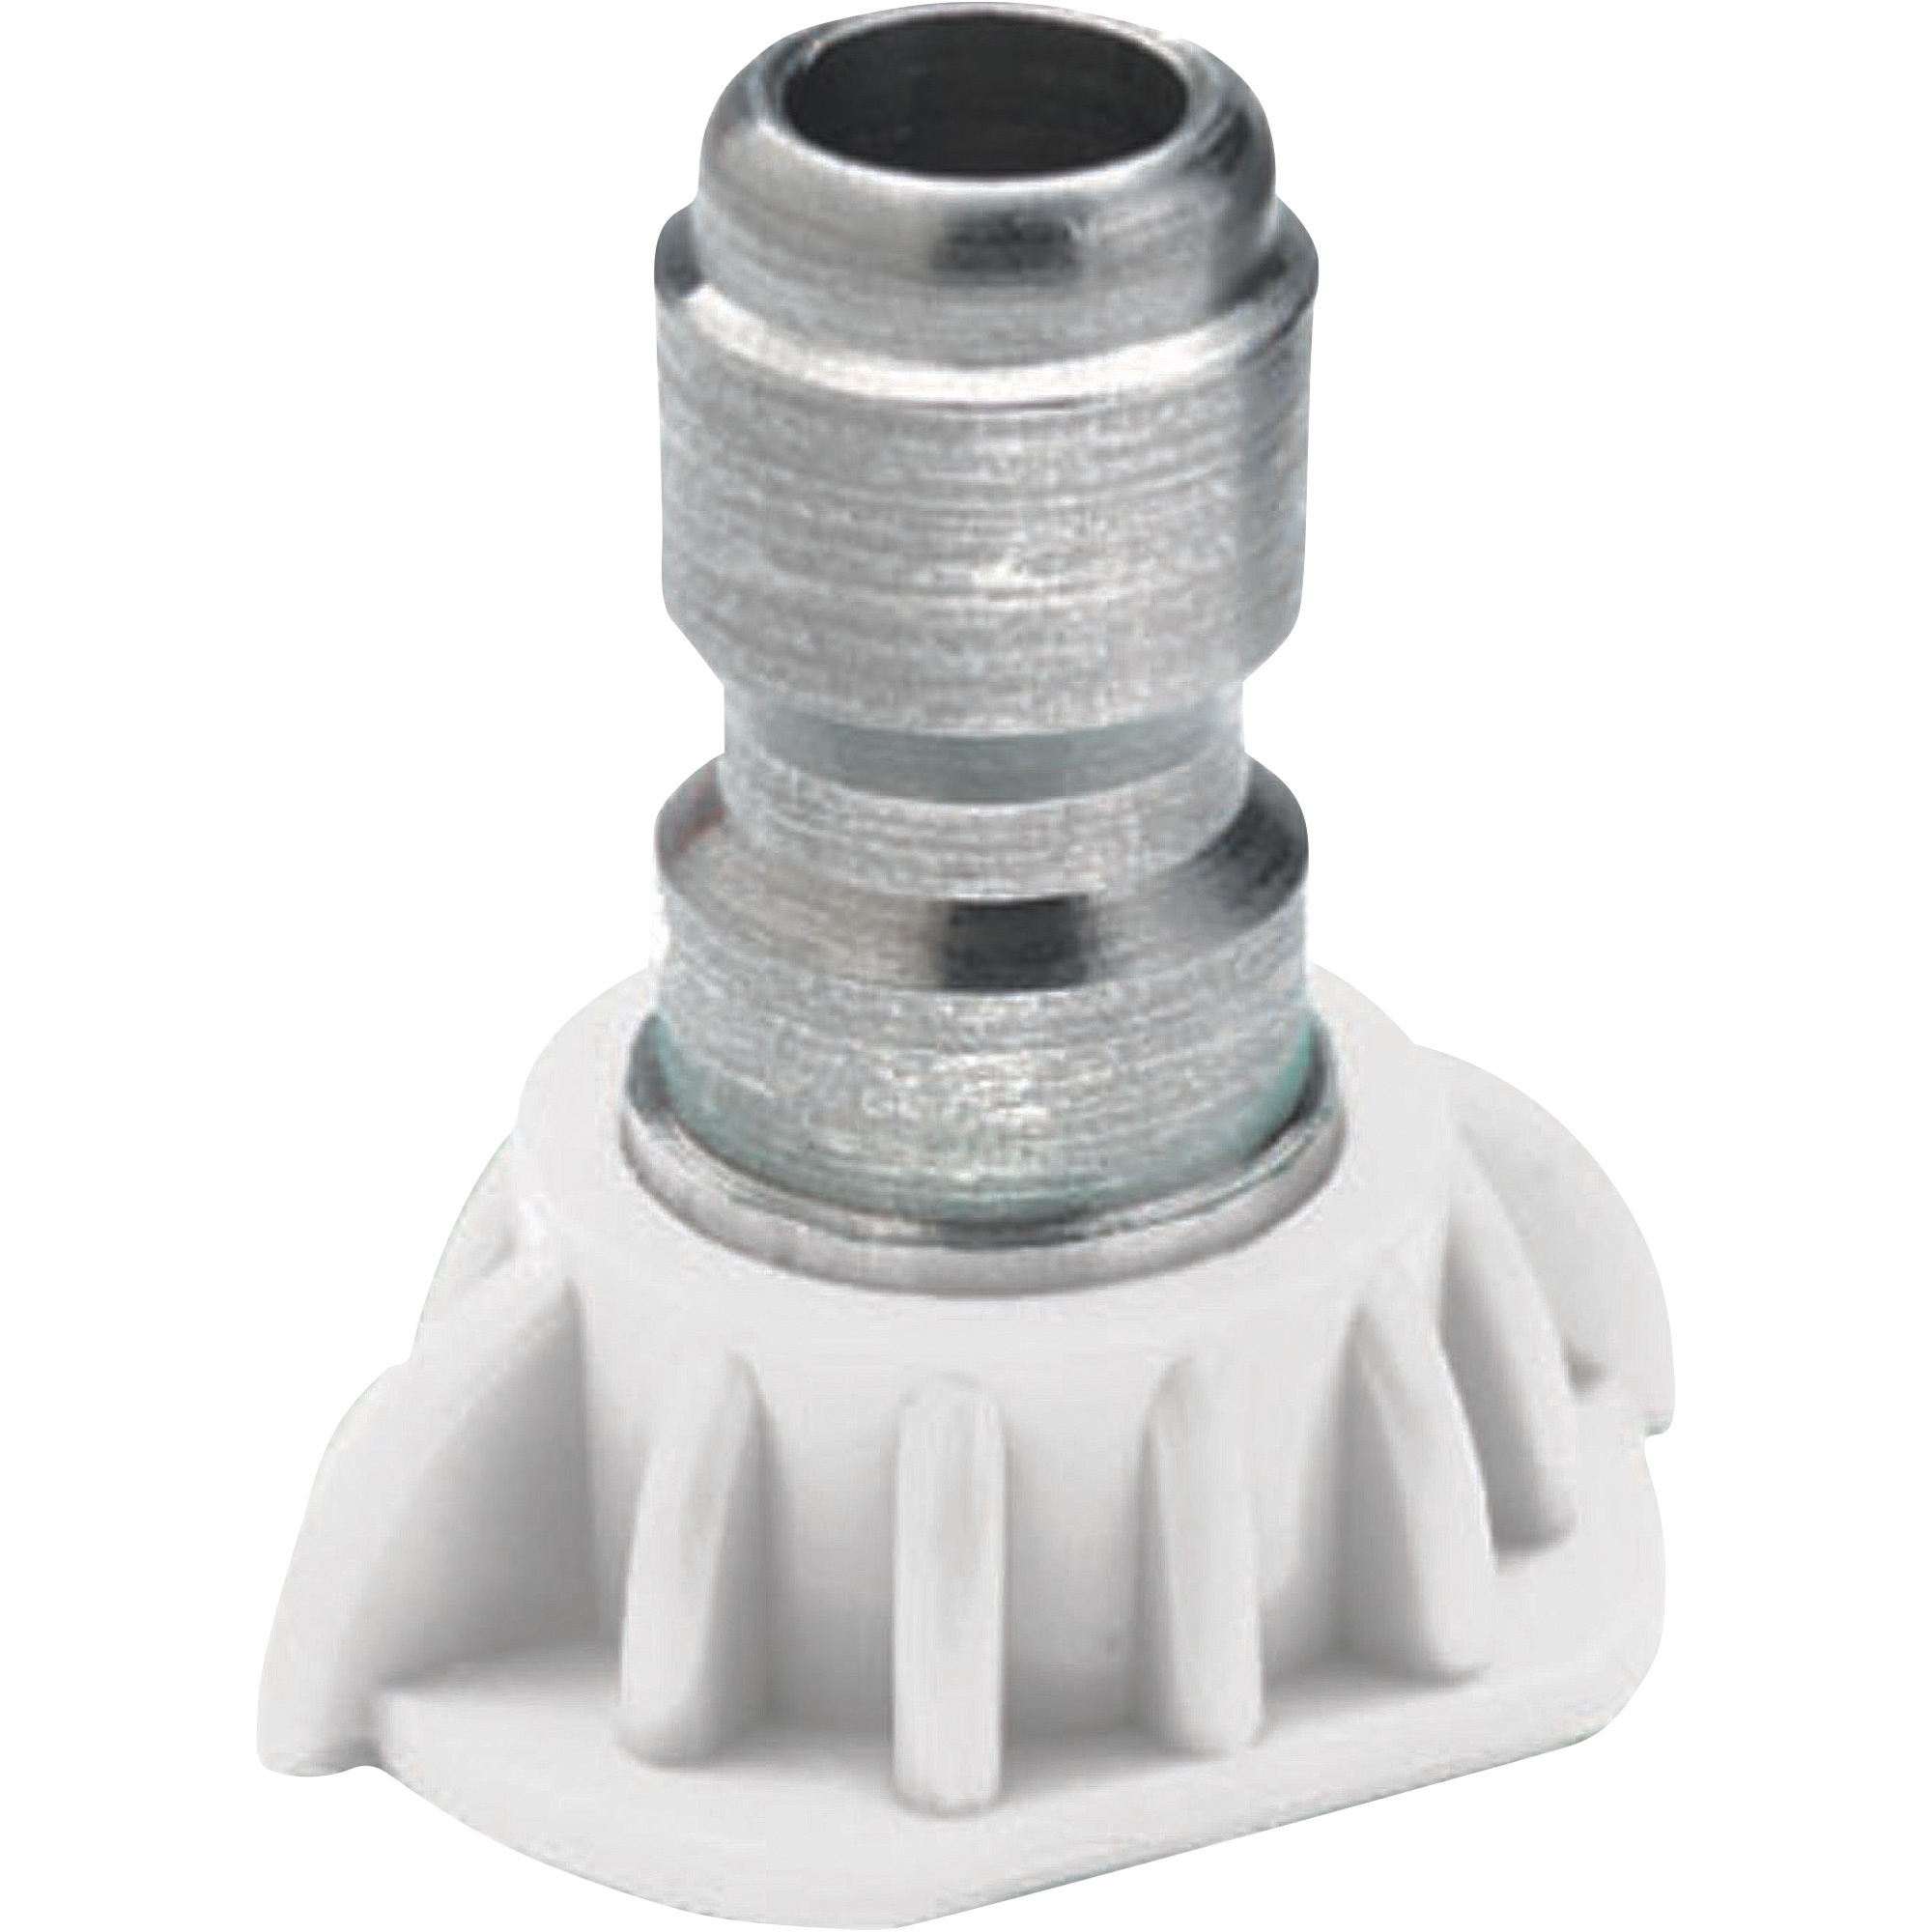 NorthStar Pressure Washer Quick Couple Spray Nozzle â 7.0 Size, 40 Degree Spray, Model N40070QP